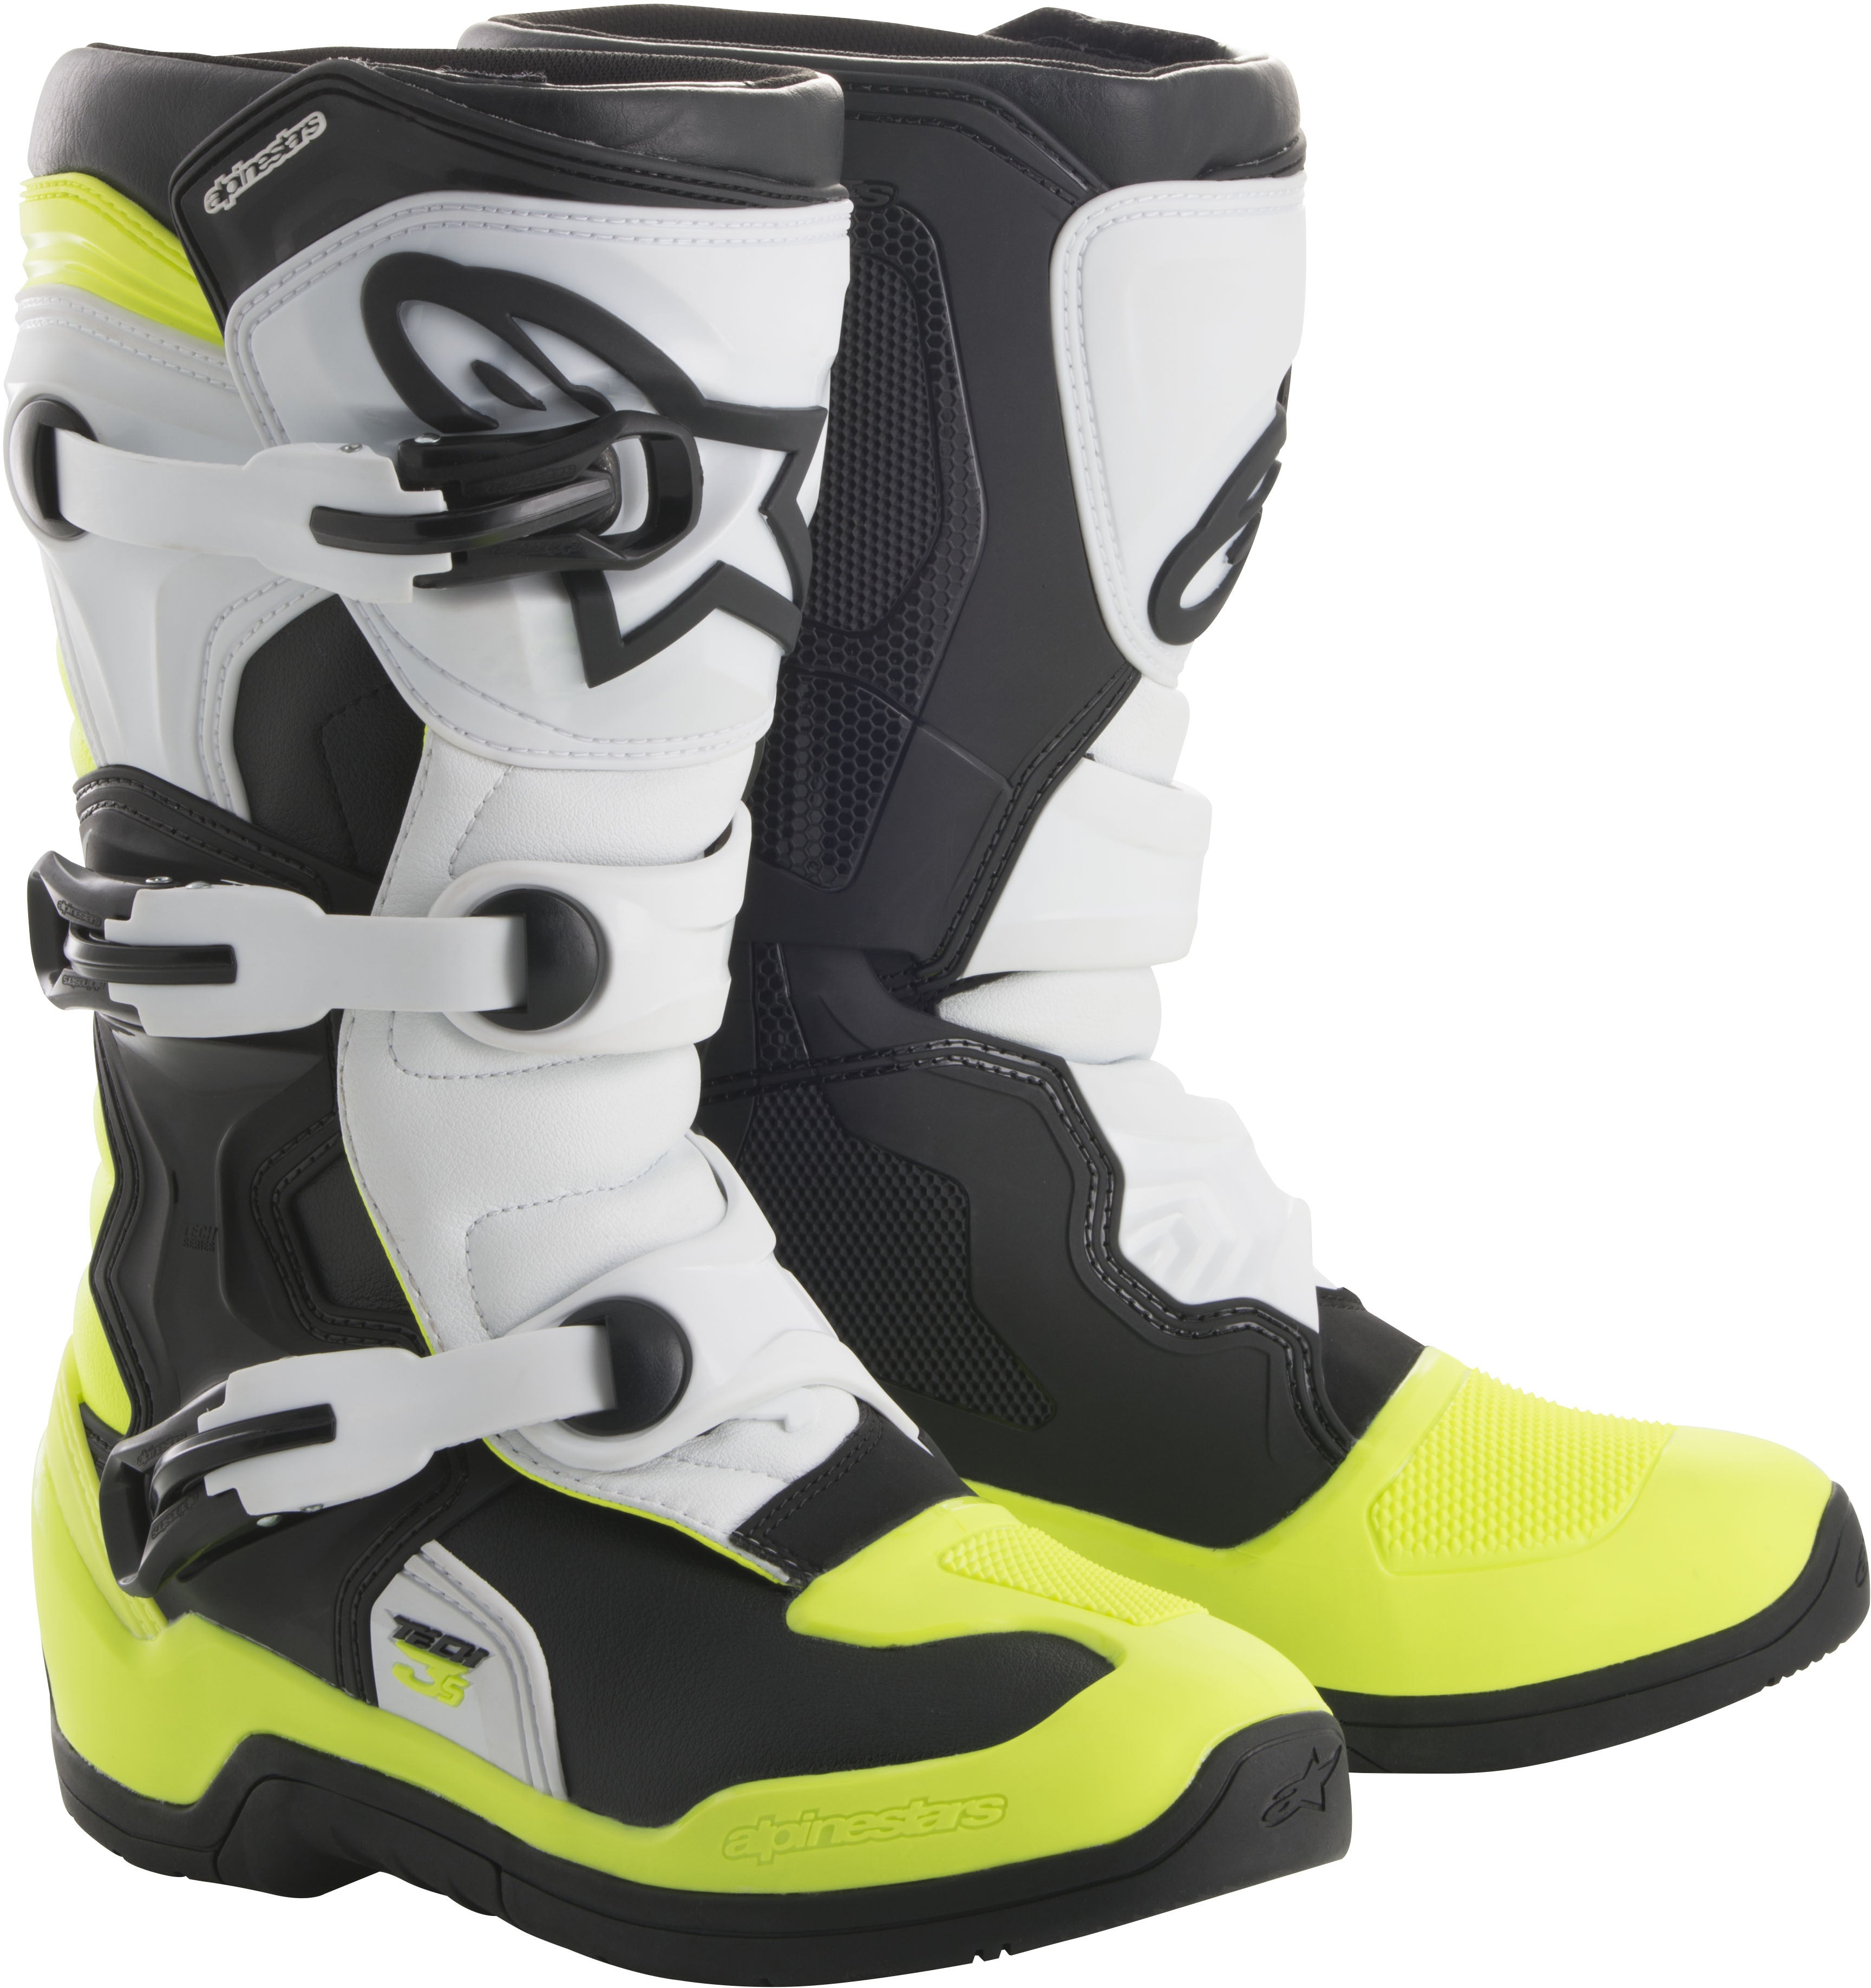 Alpinestars Tech 3S Boots Black/White/Yellow Us 07 2014018-125-7